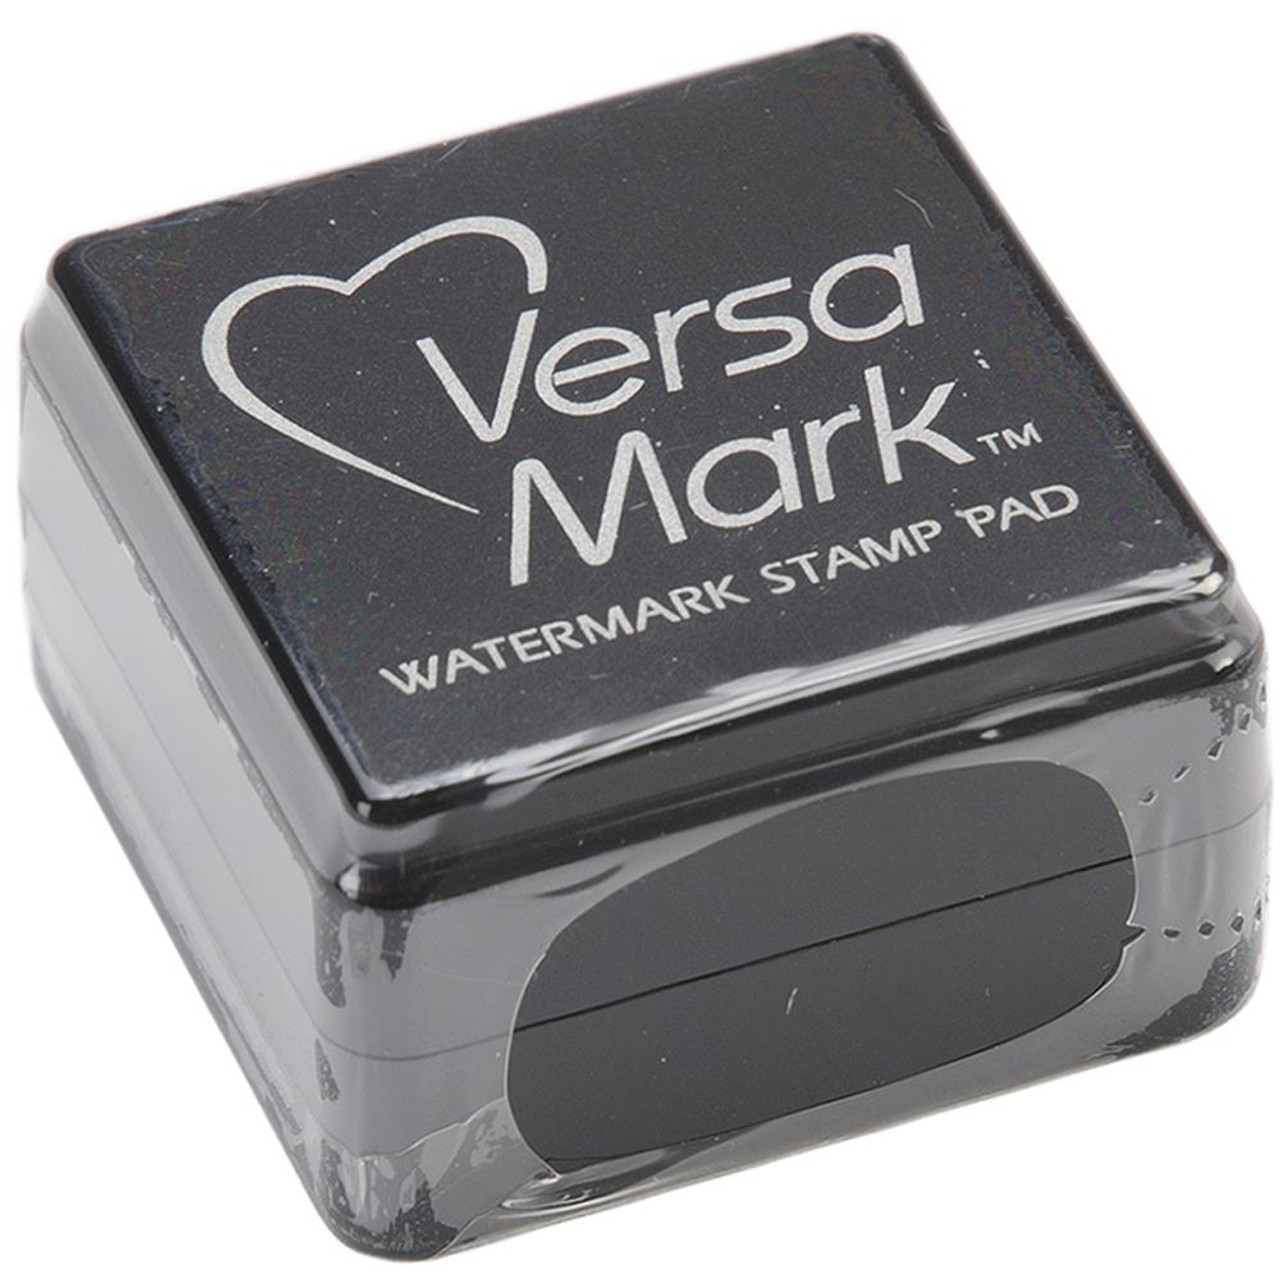 VersaFine Pigment Ink Pad - Onyx Black